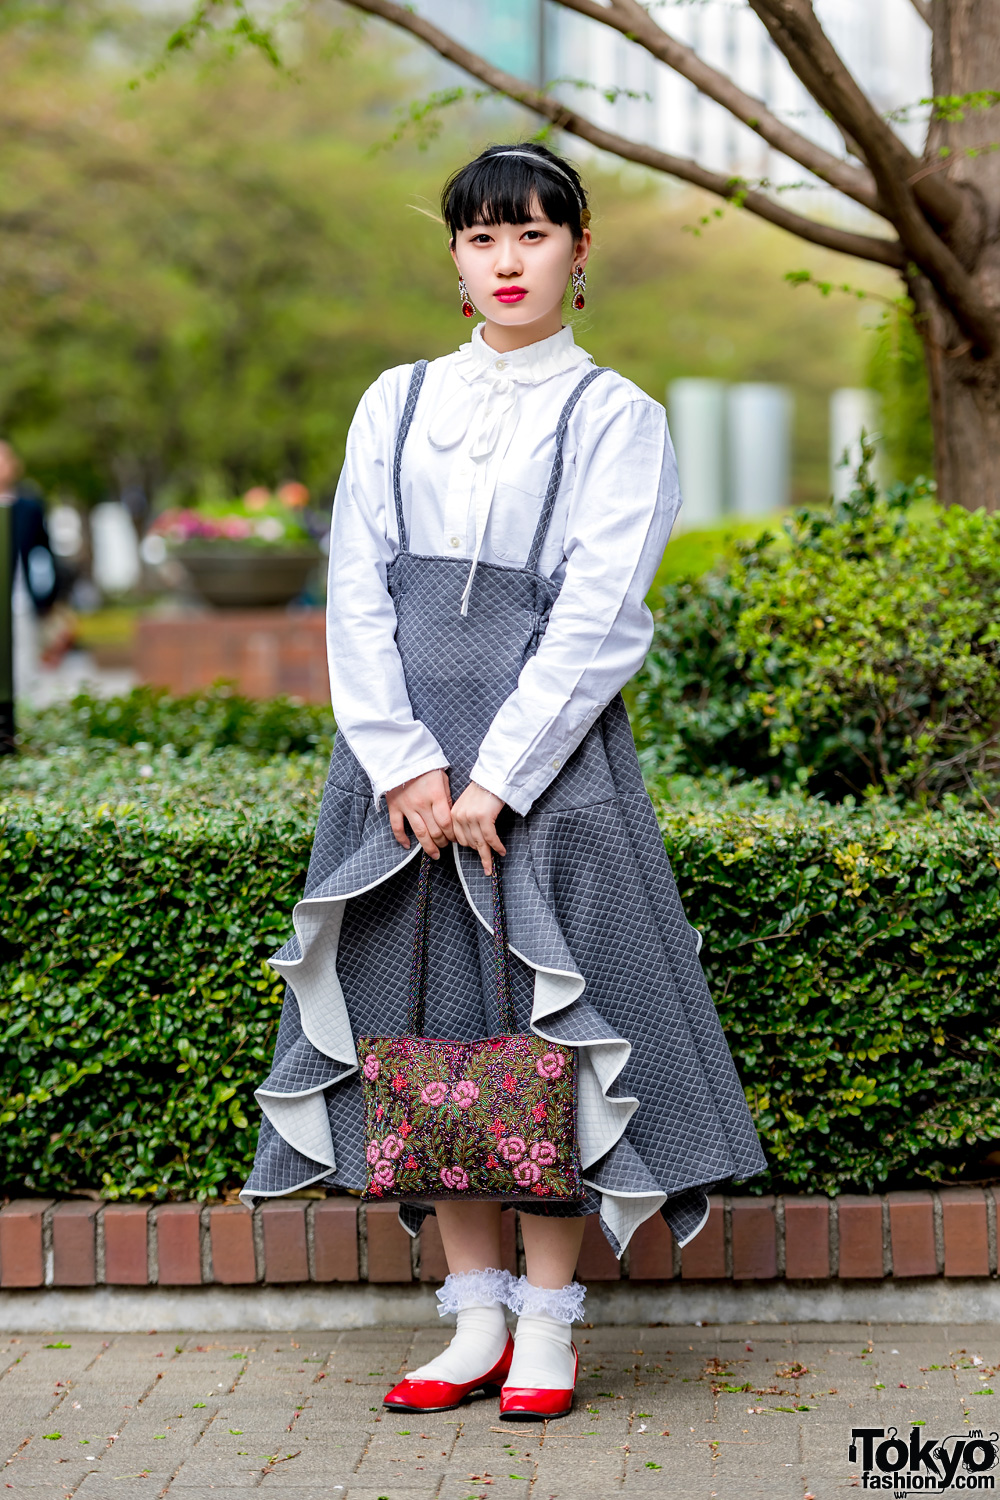 Harajuku Girl in Charming Vintage Streetwear Style